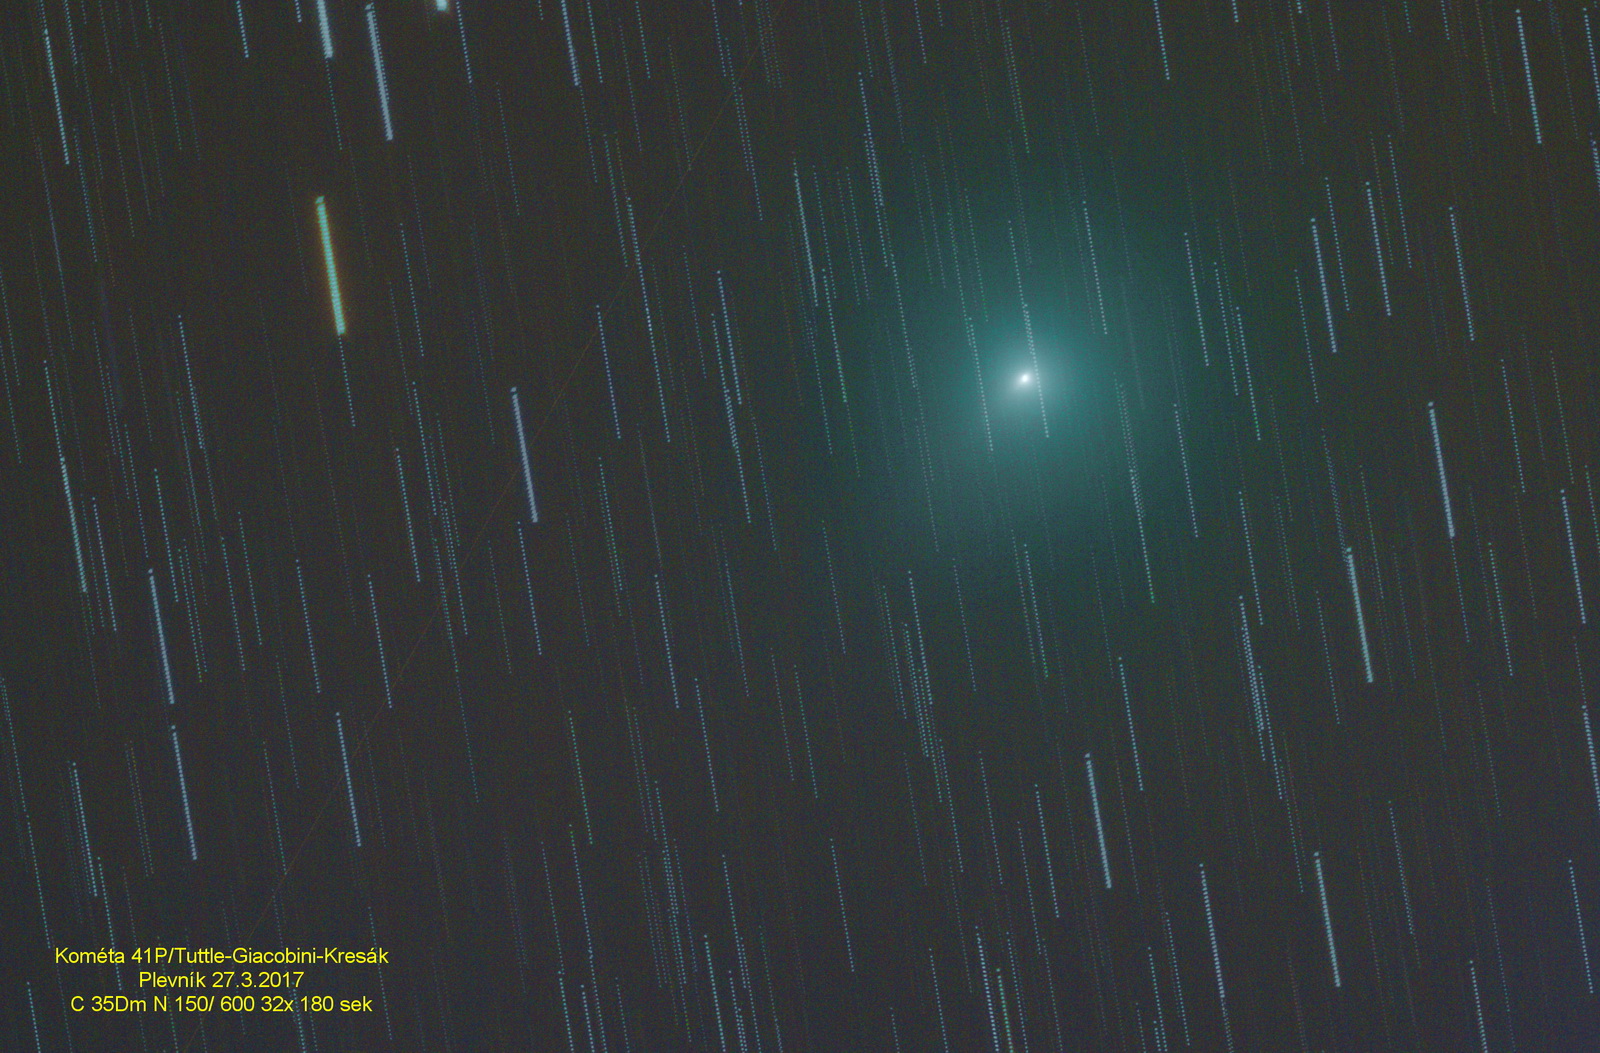 Kométa 41P/tuttle-Giacobini- Kresák